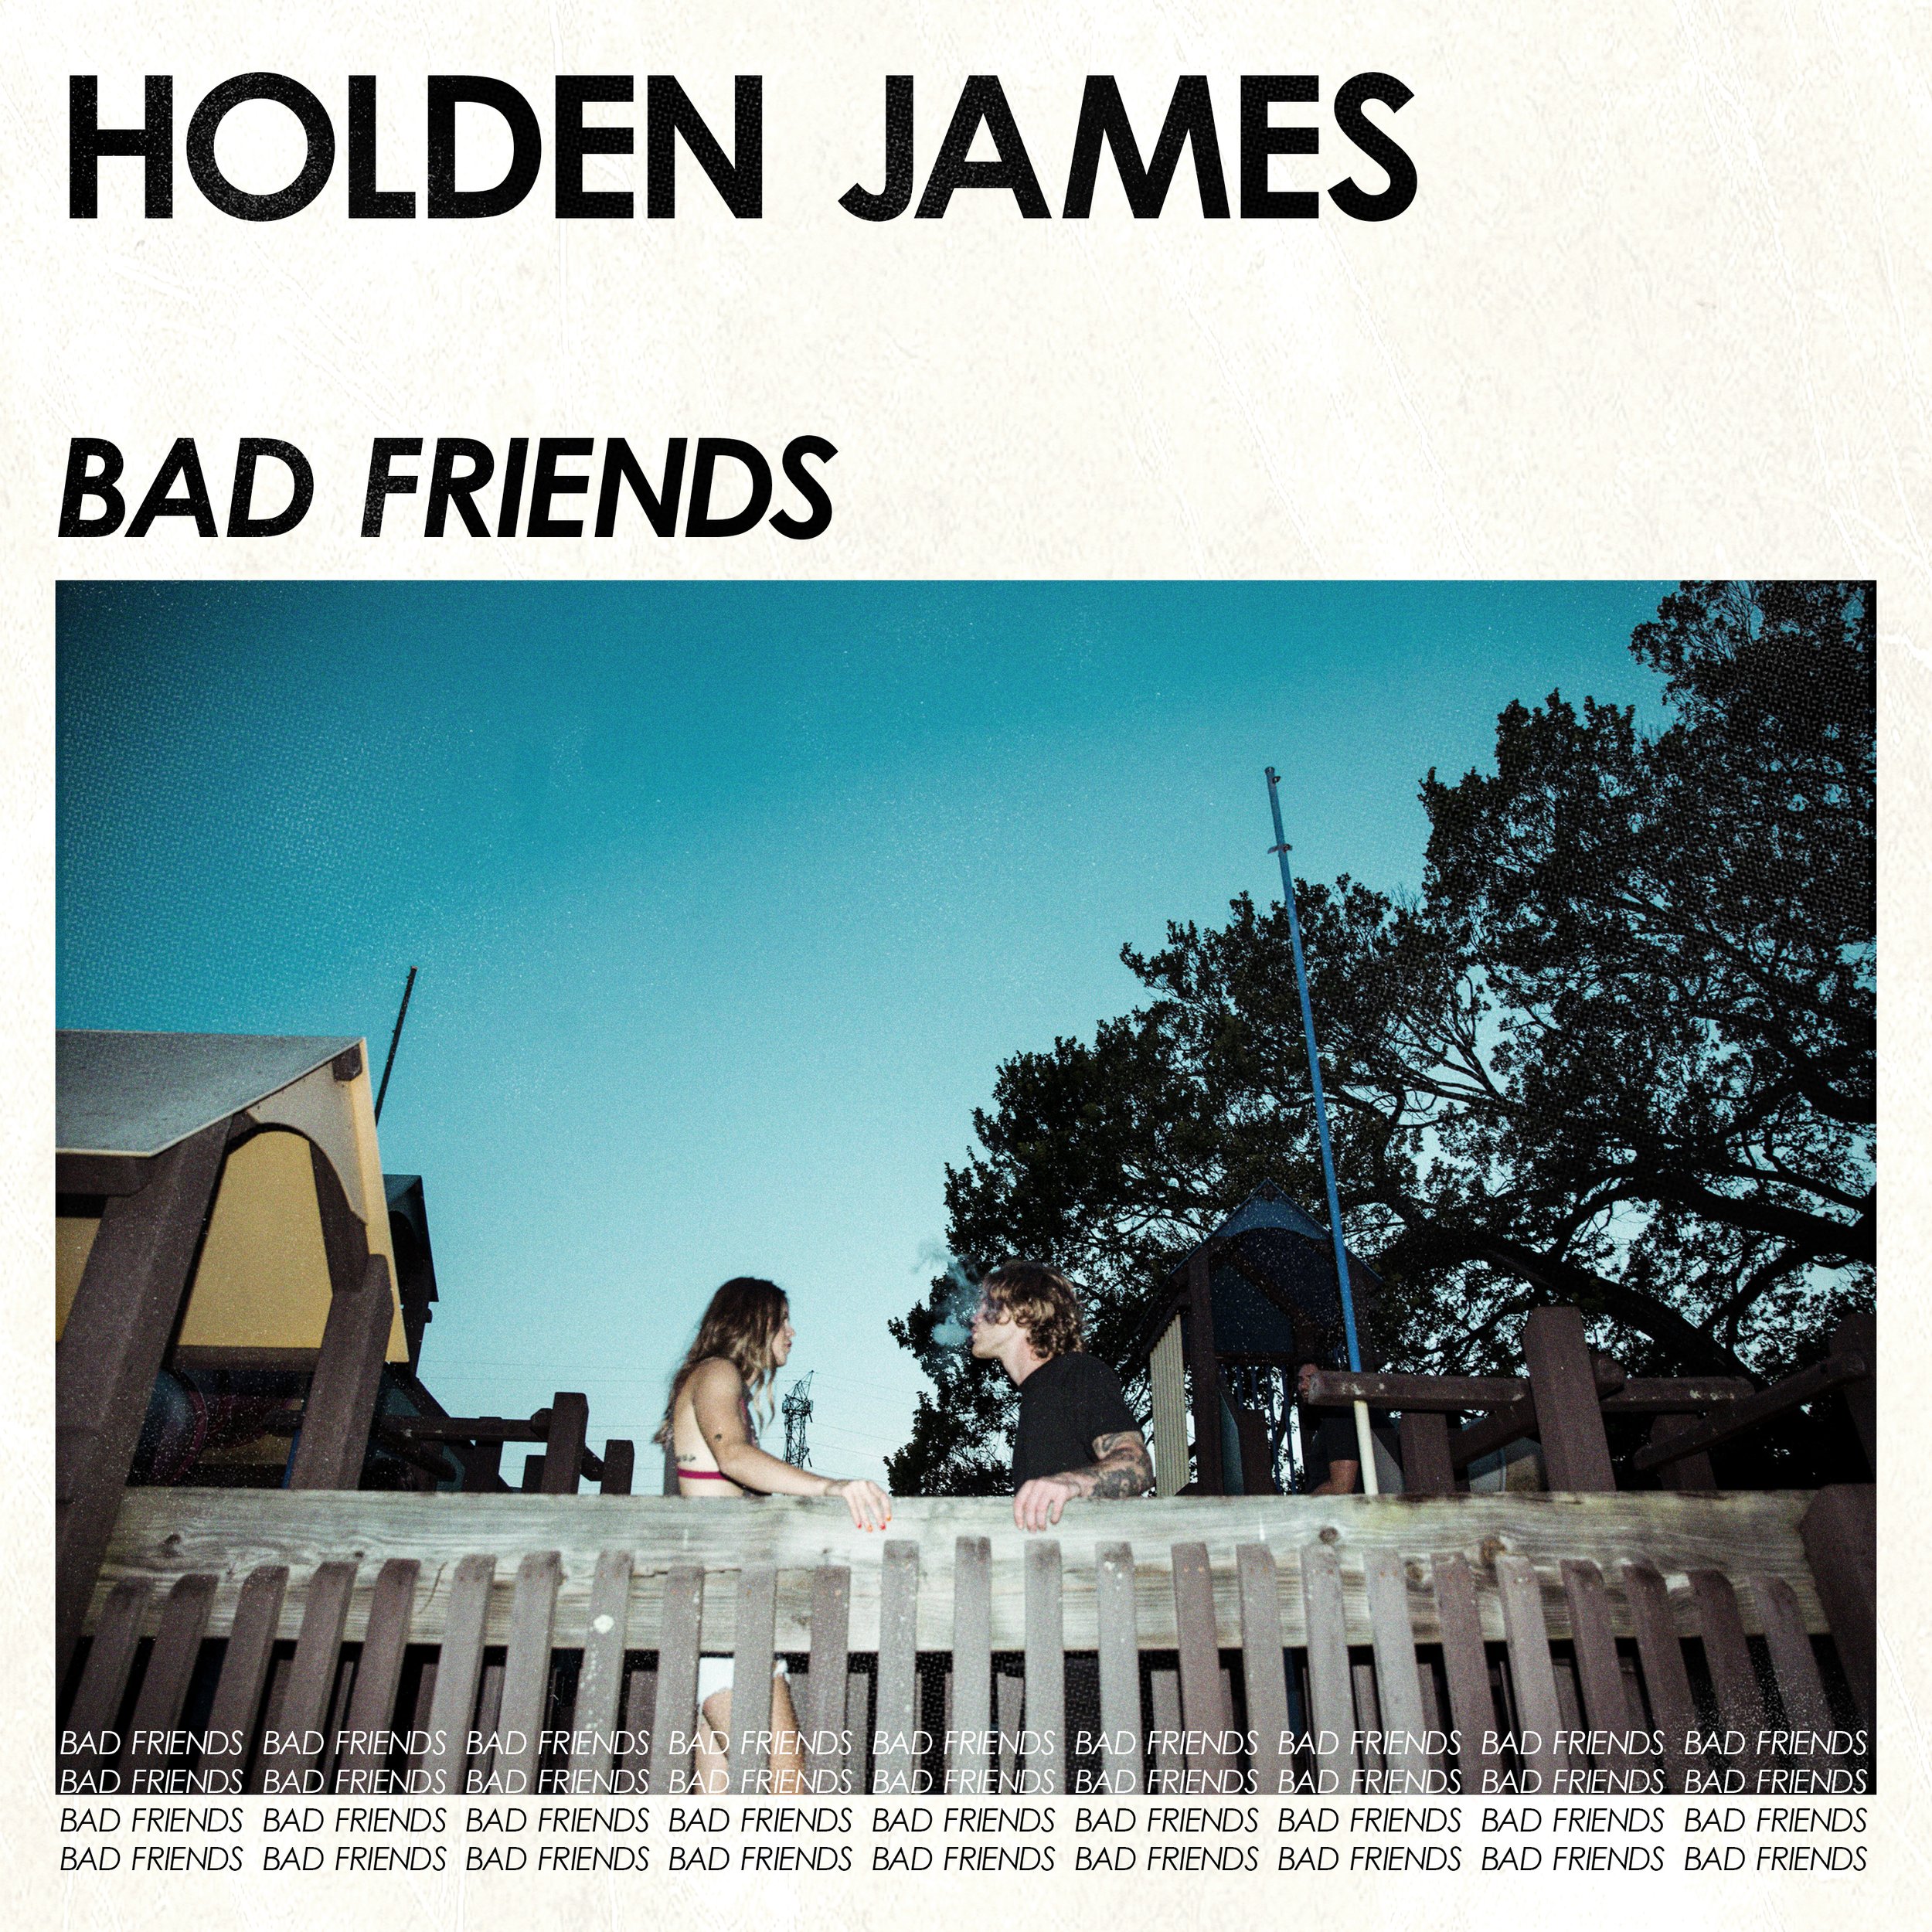 HoldenJames_BadFriends_FNL.jpg